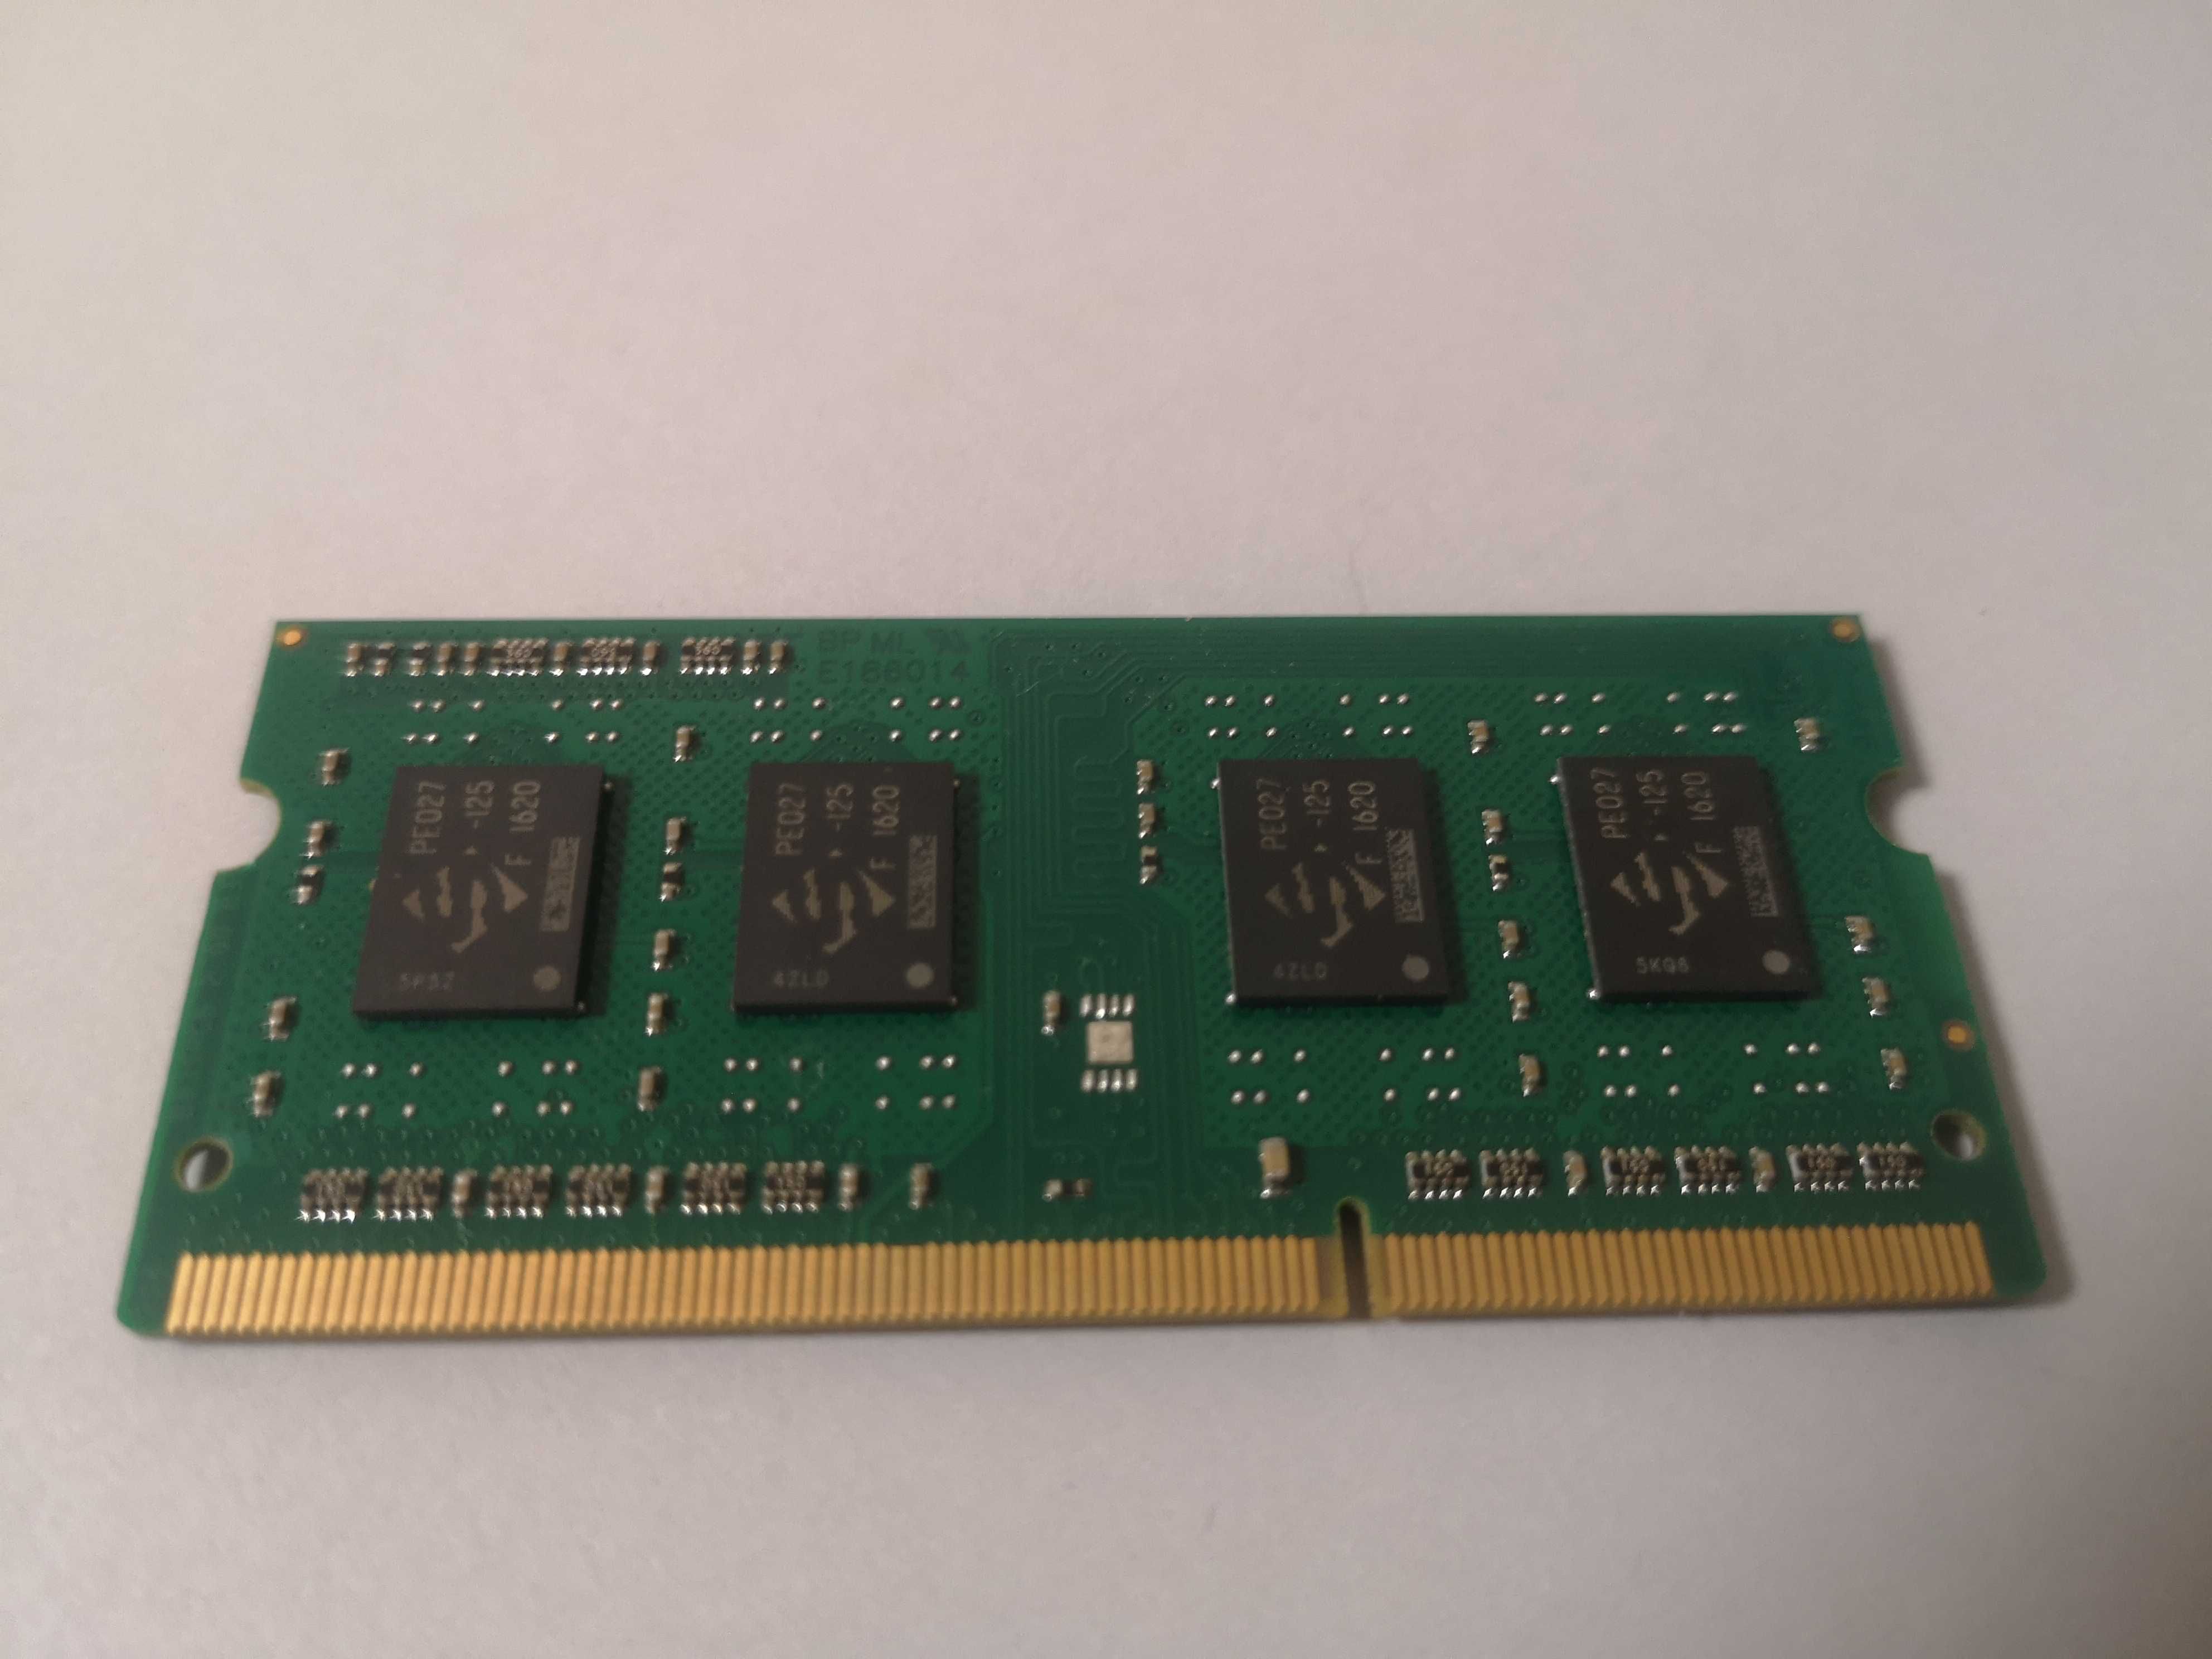 ОЗУ, память для ноутбука, Transcend SODIMM DDR3 4Gb 1600MHz 1R*8, Б/У